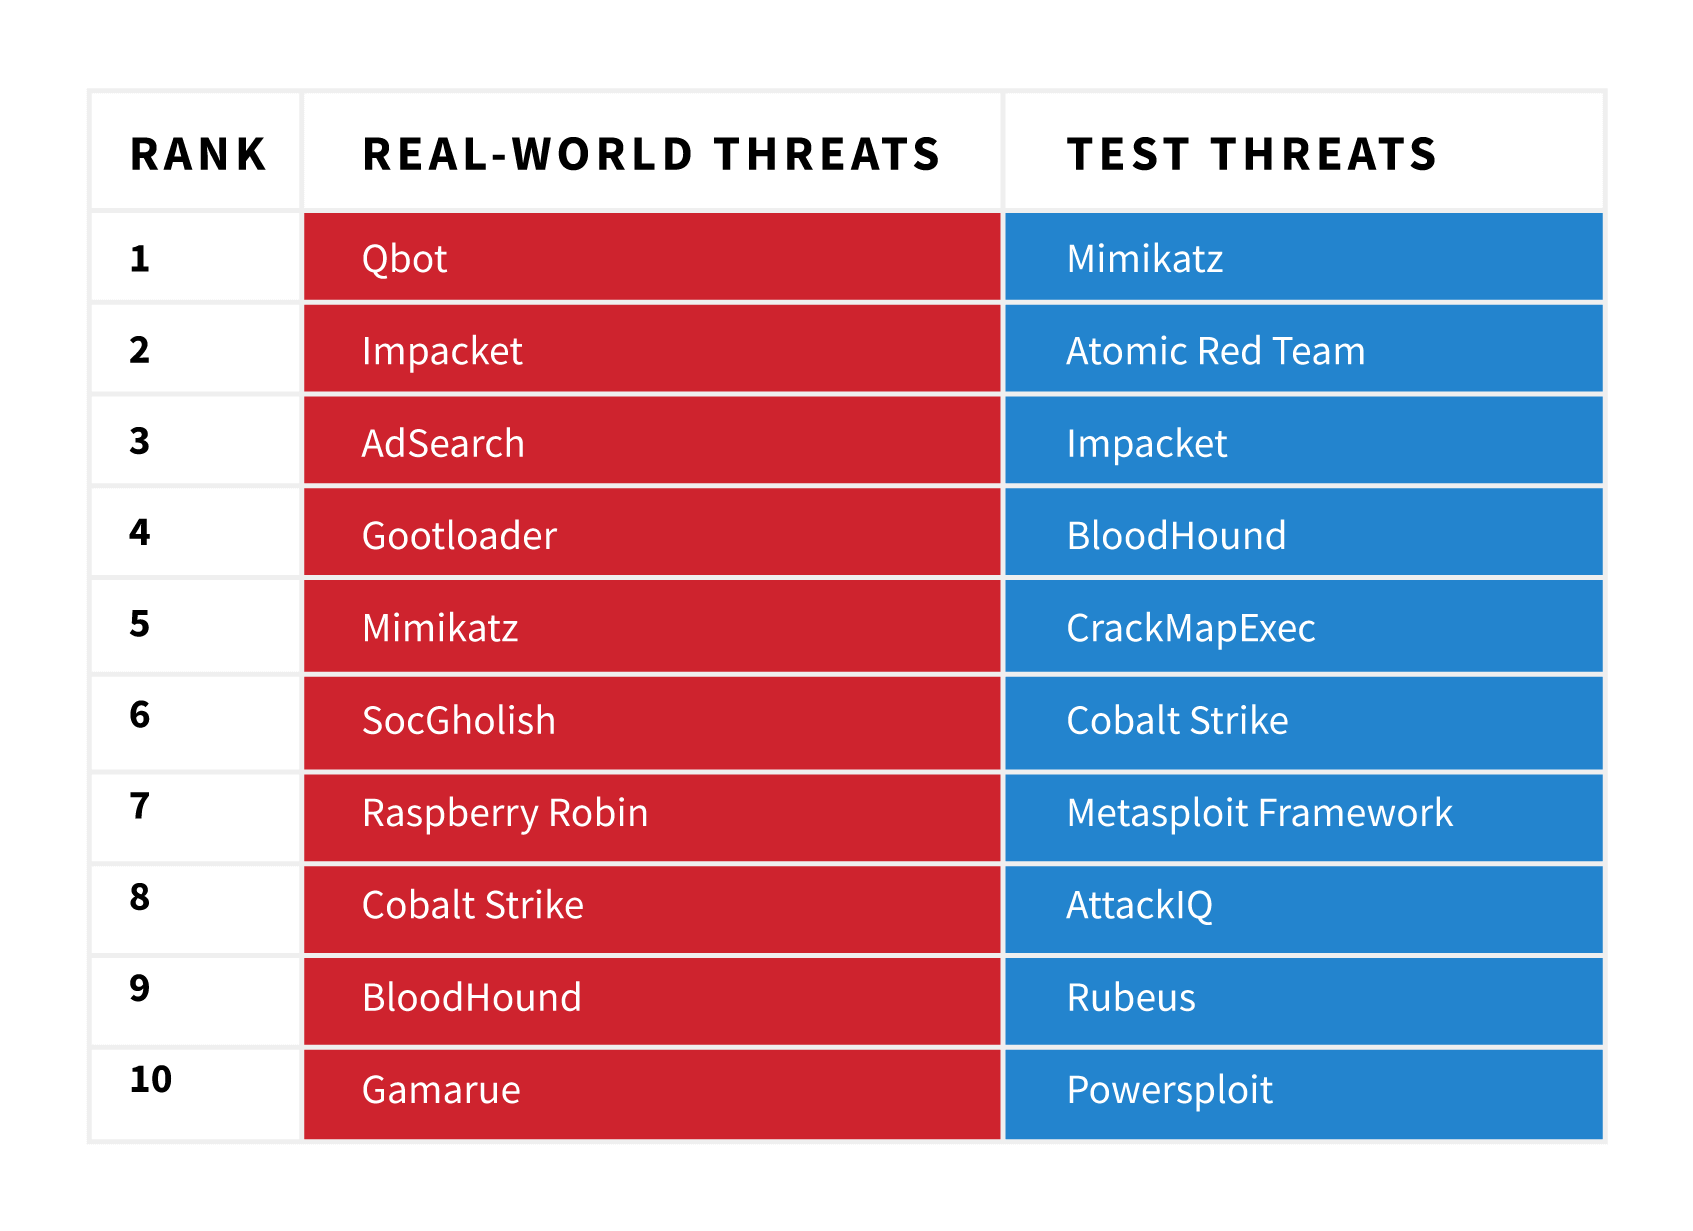 Top threats vs tested threats